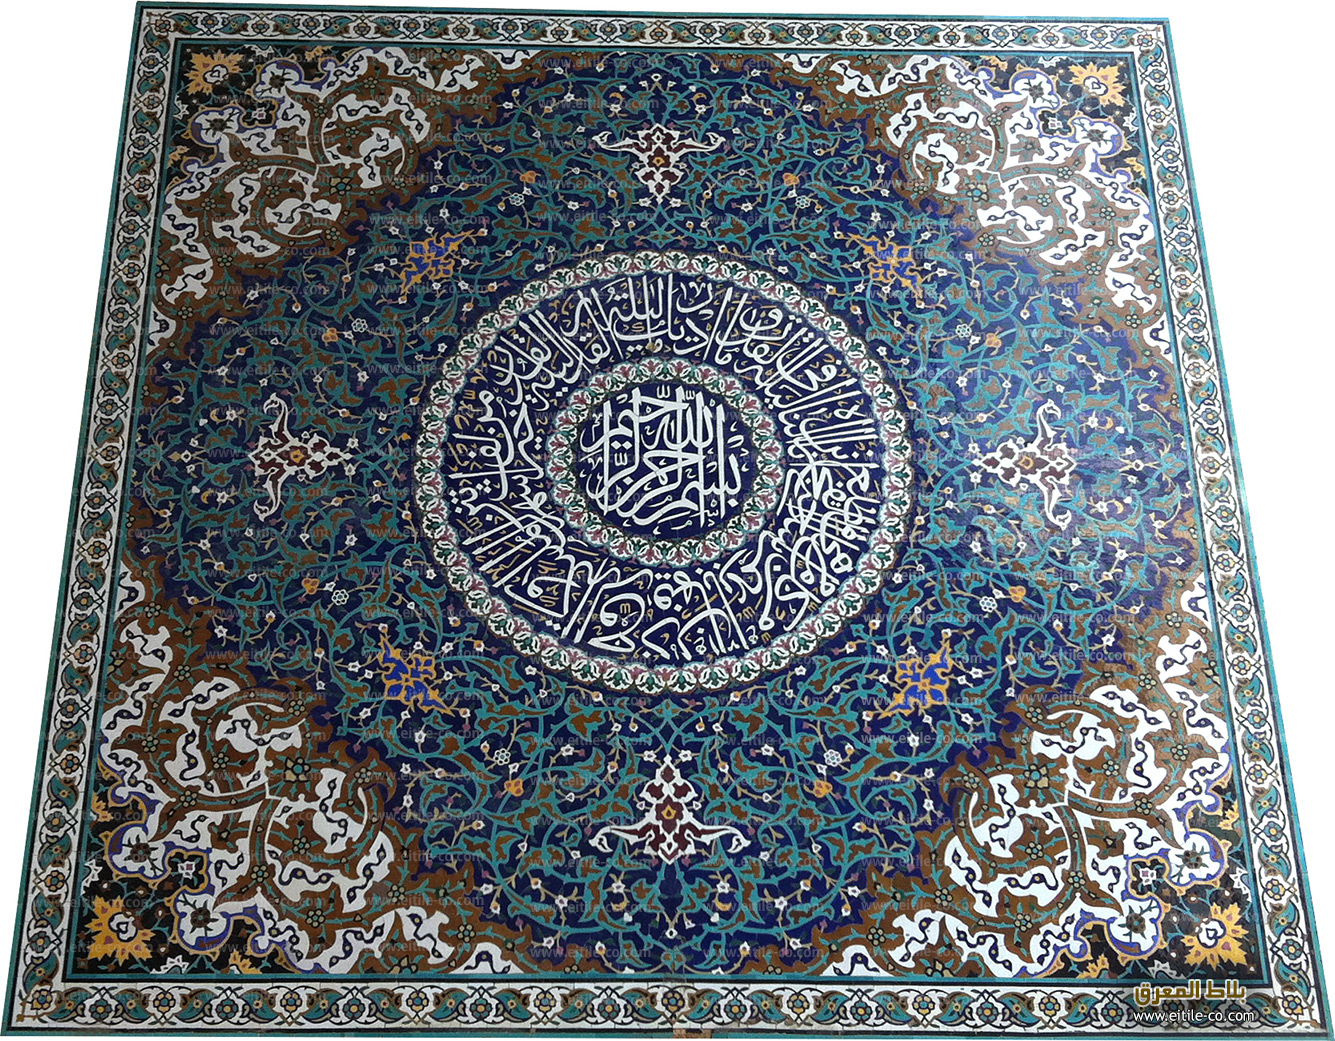 Mosaic tile panel designer and manufacturer, www.eitile-co.com